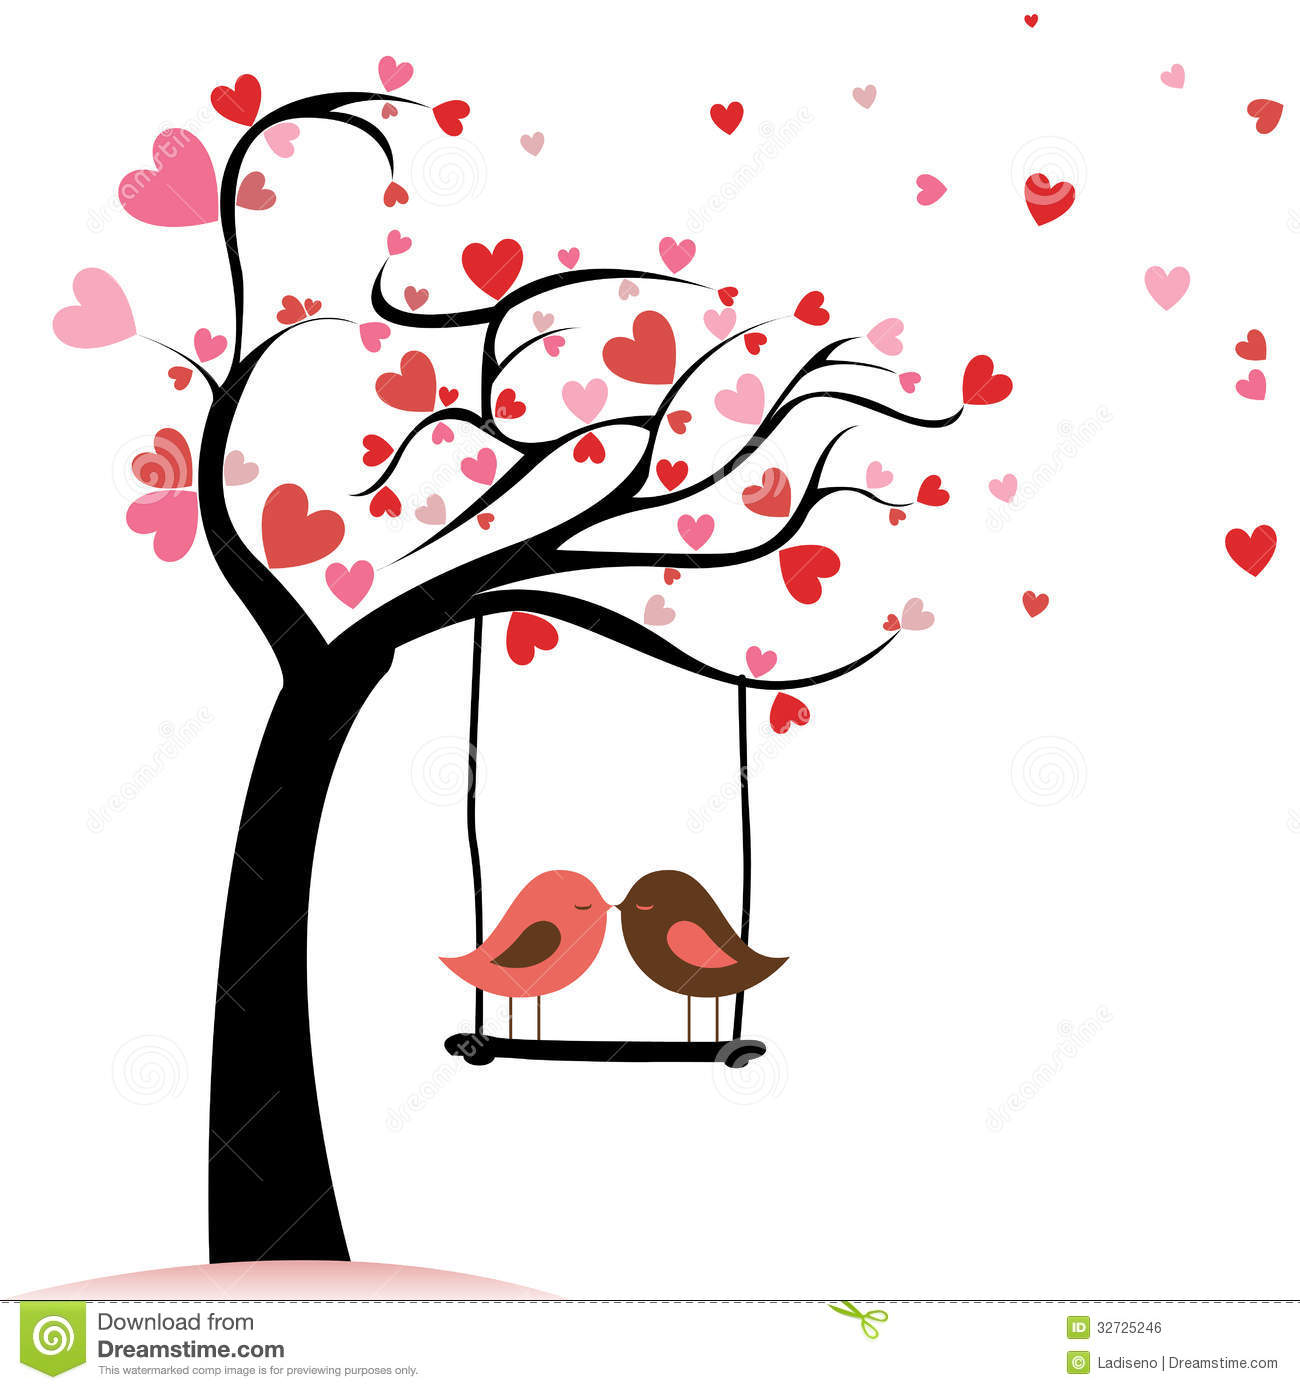 Love Birds Royalty Free Stock Image   Image  32725246